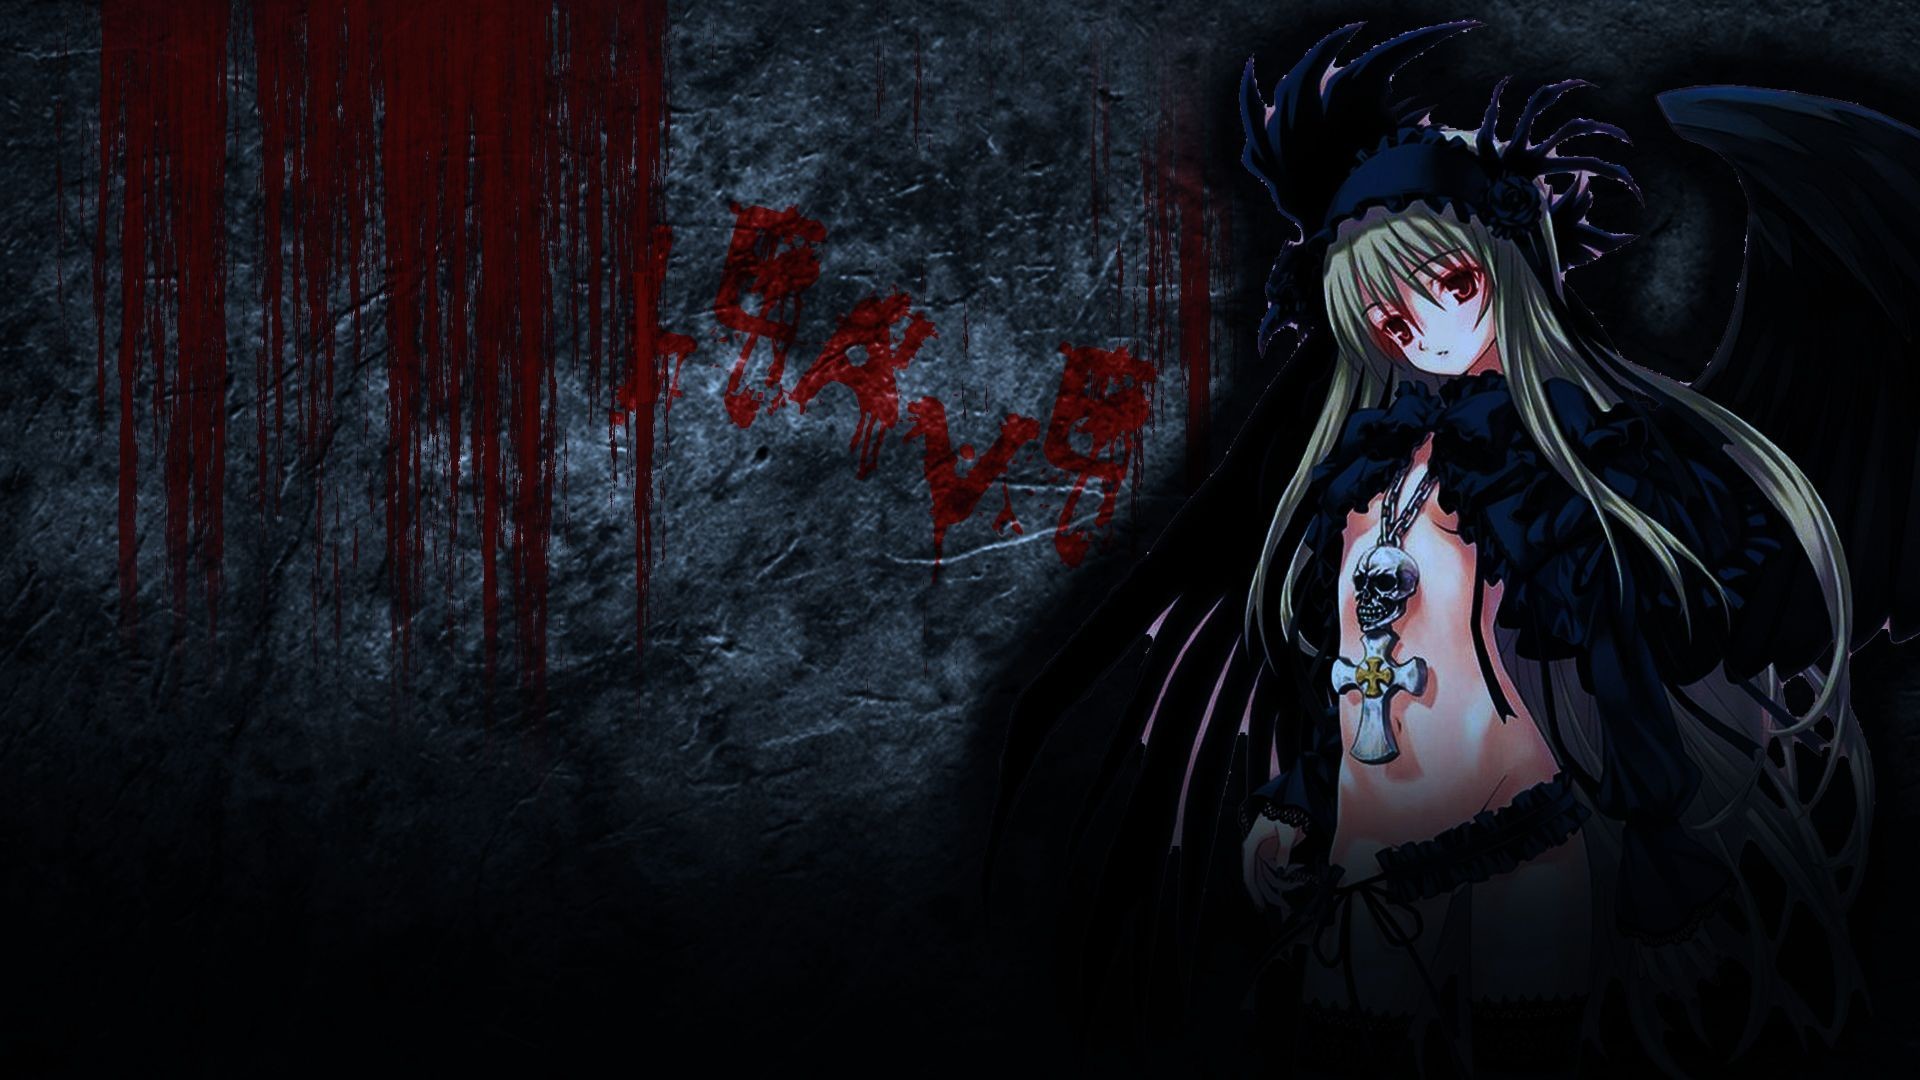 dark anime wallpaper hd,darkness,red,black hair,cg artwork,goth subculture